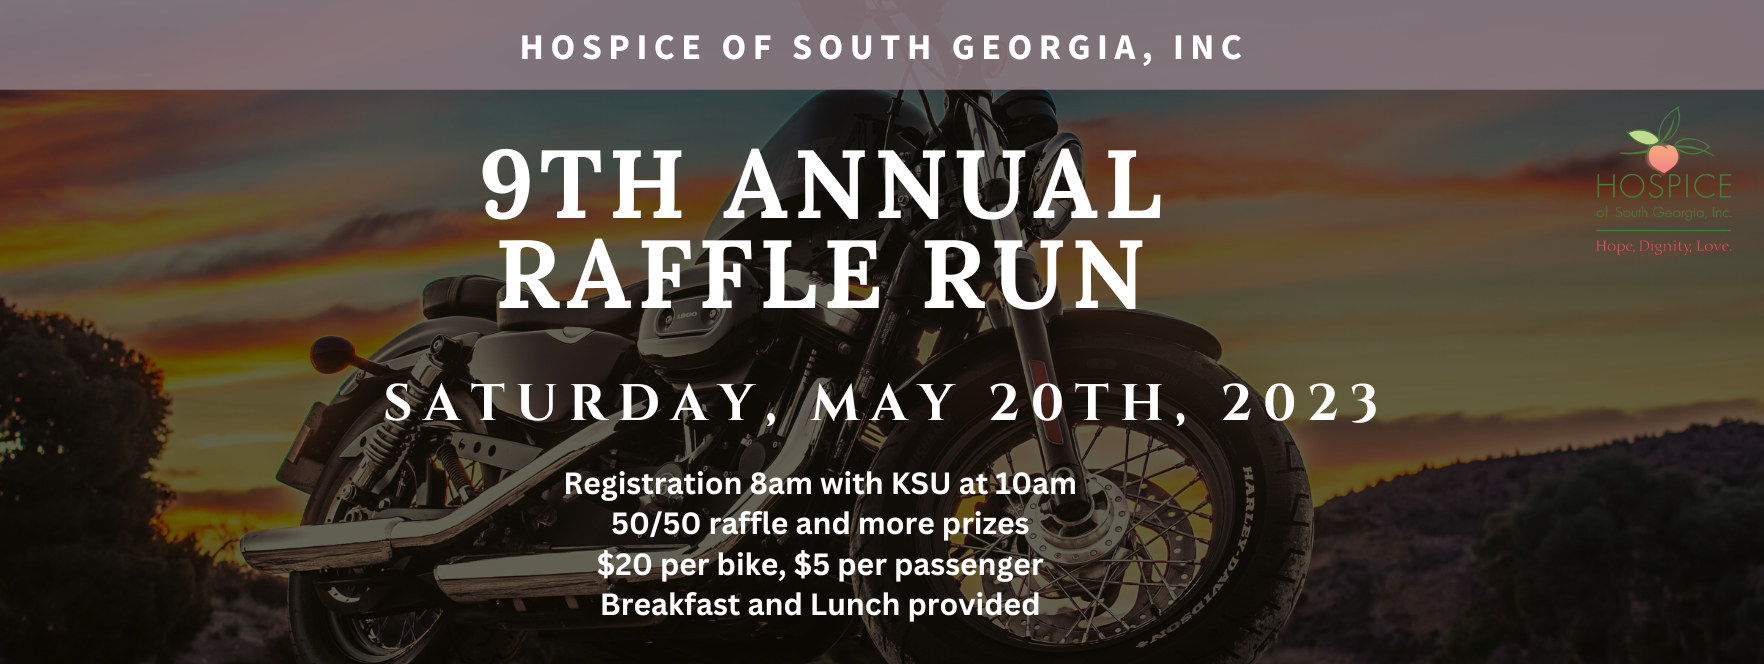 9th Annual 50/50 Raffle Run to benefit Hospice of South Georgia Inc